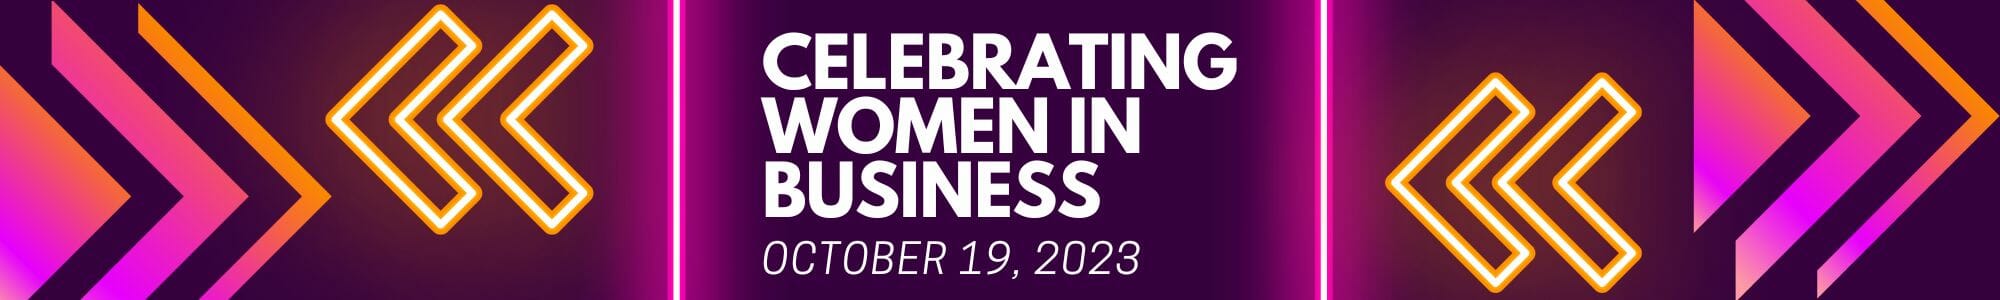 Celebrating Women in Business (320 × 100 px) (1)